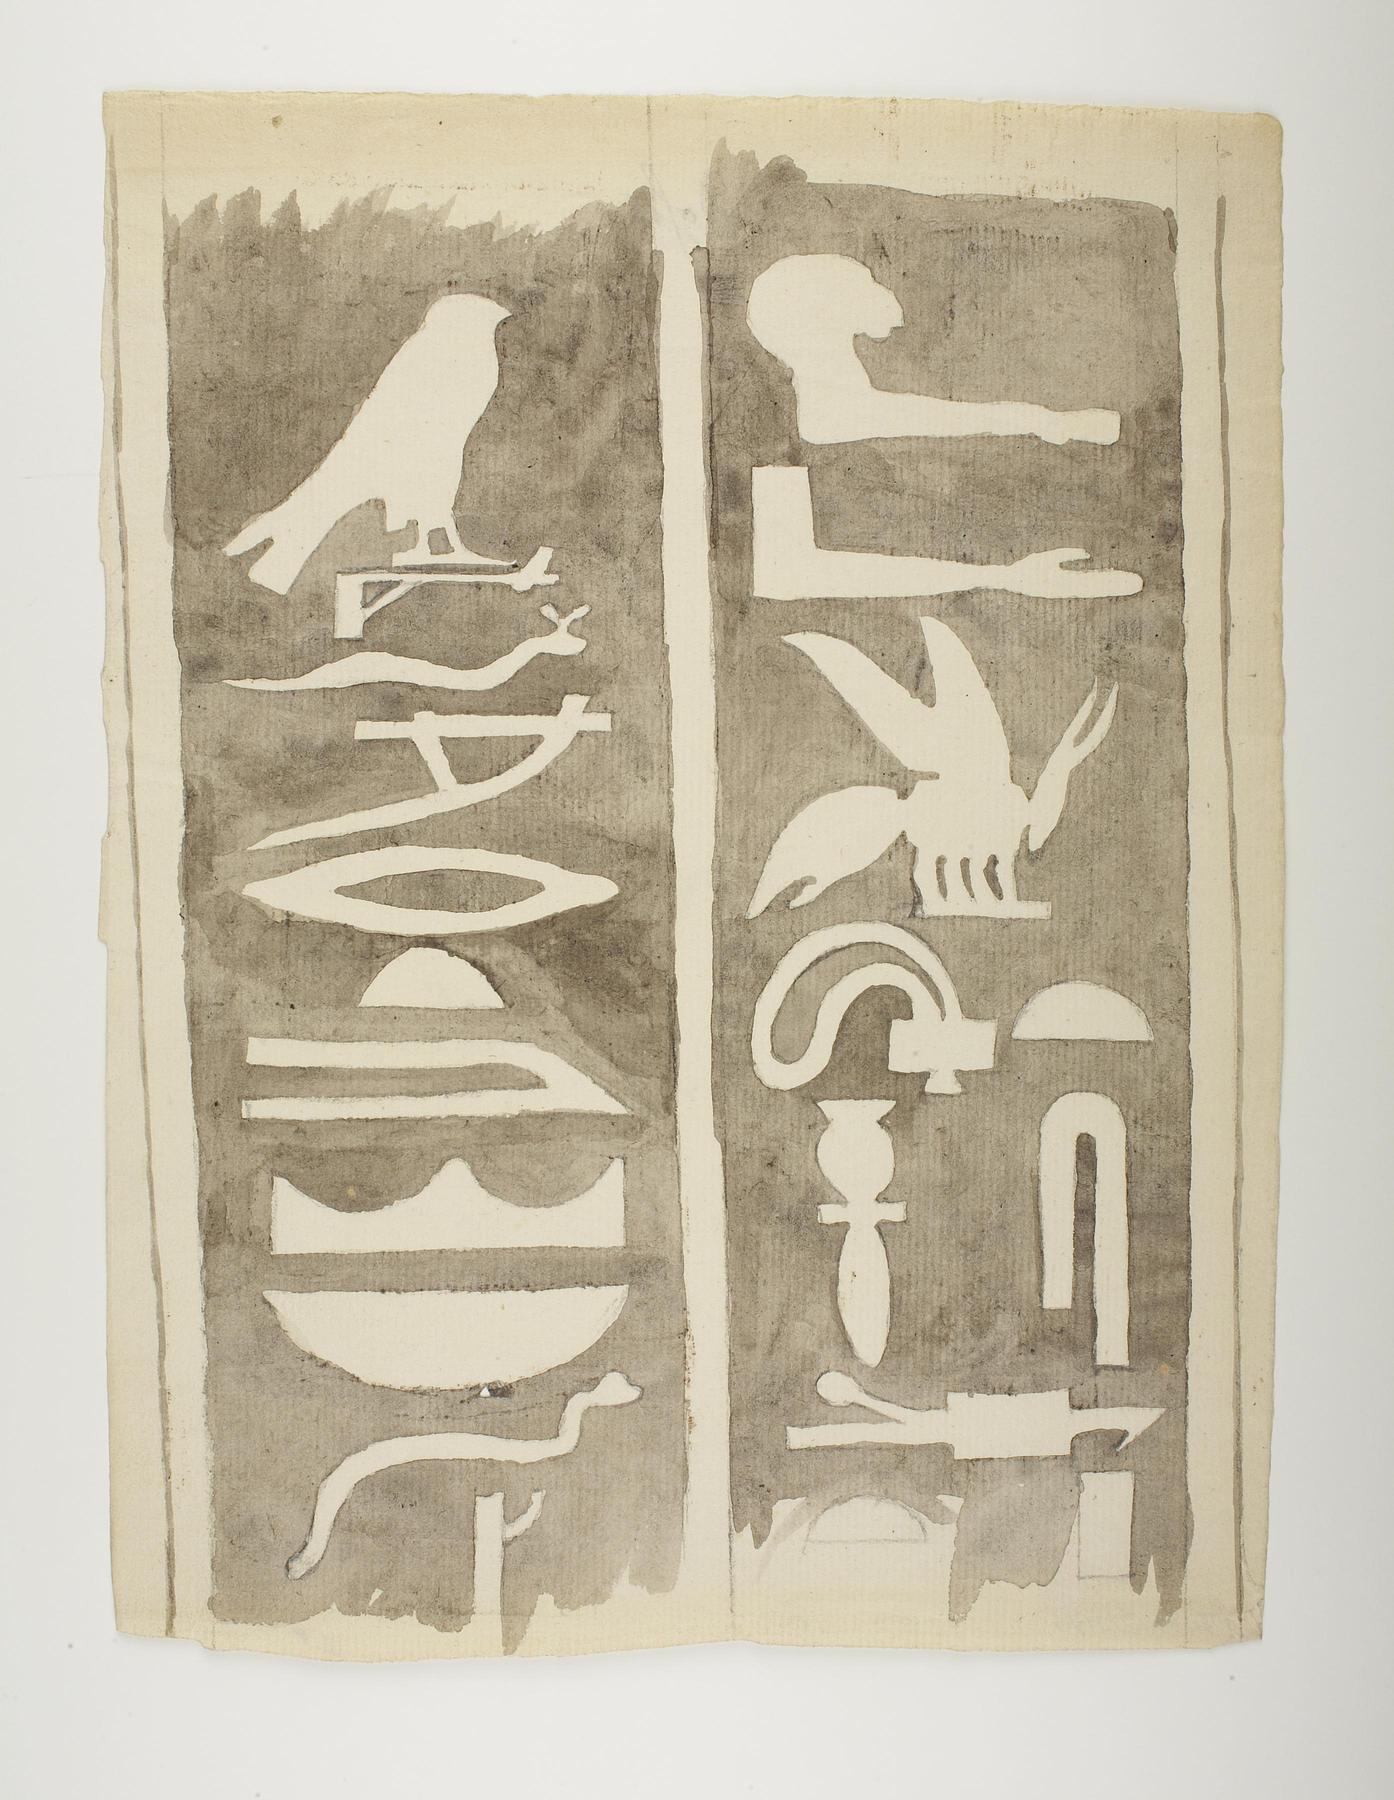 Hieroglyphs, third fragment from the top, D1180